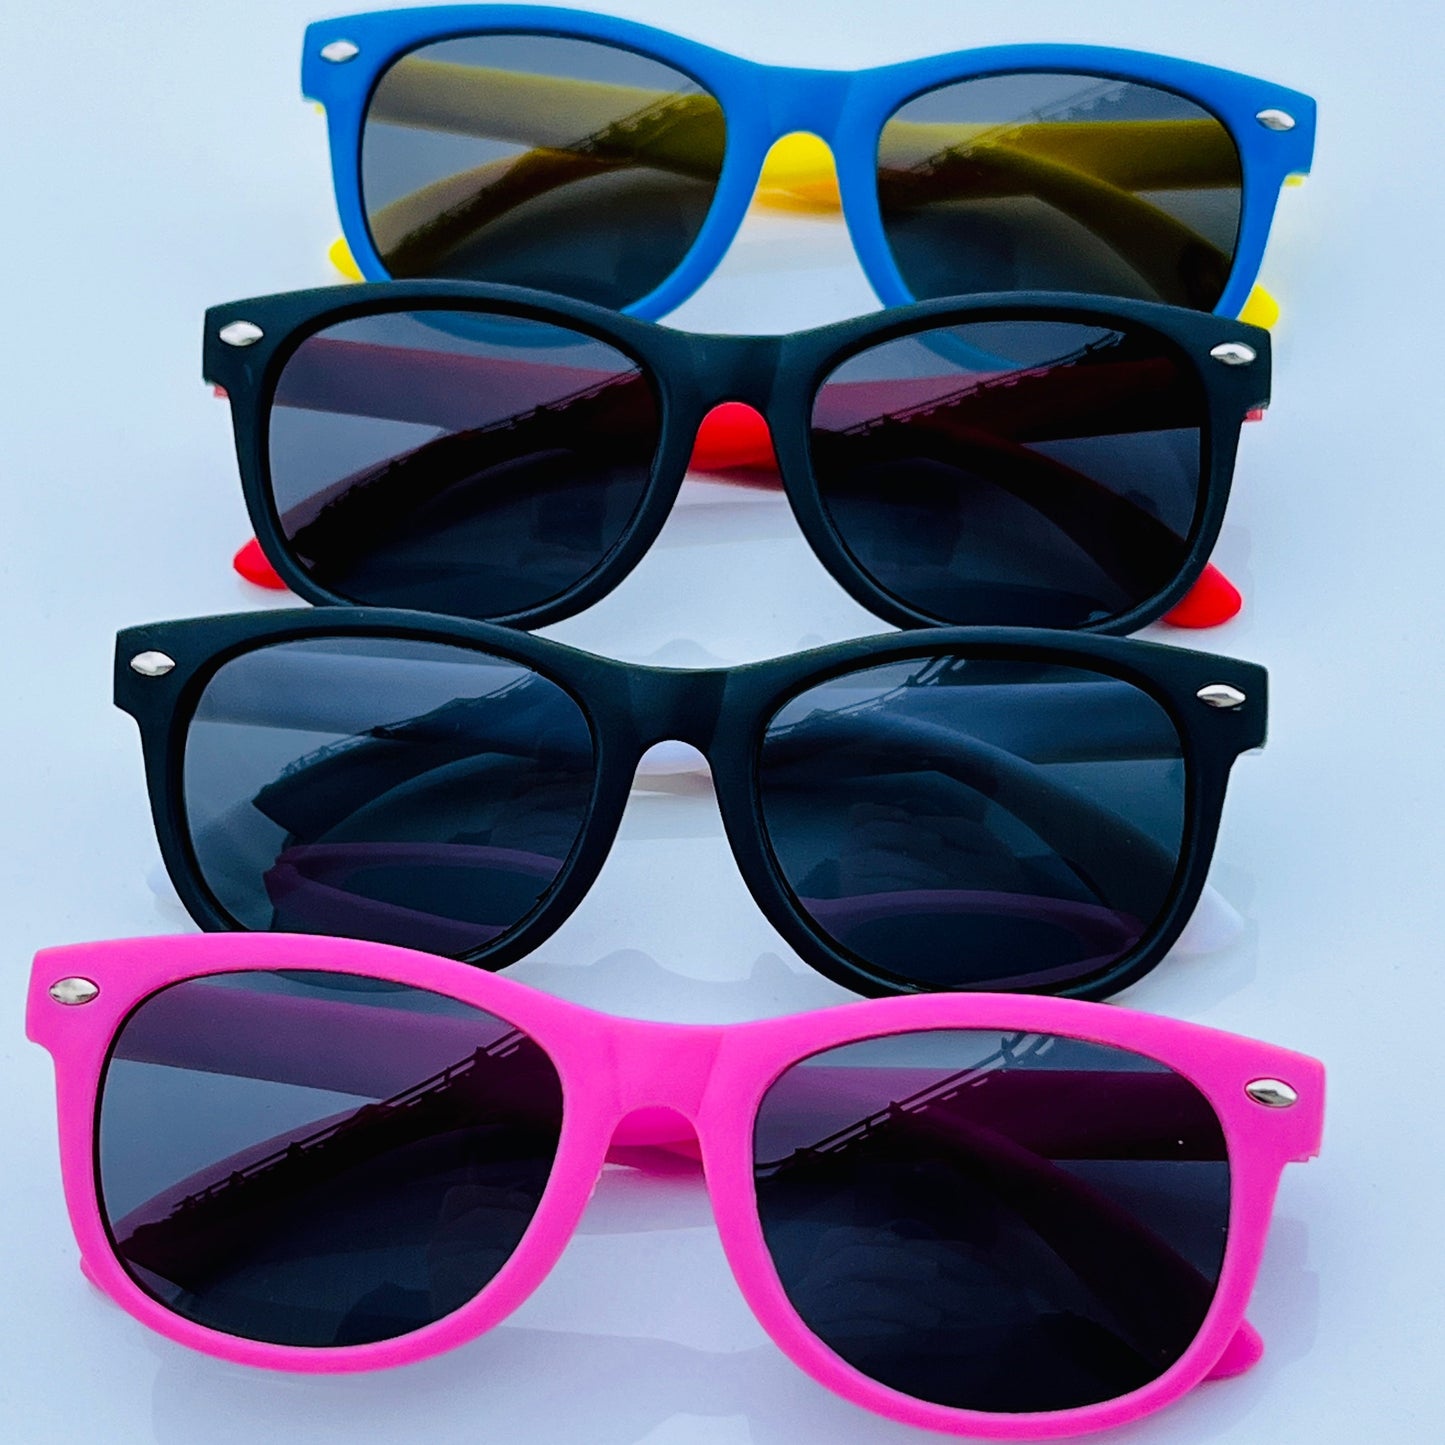 Stilige og polariserte solbriller til barn – Fleksible design for ekstra komfort